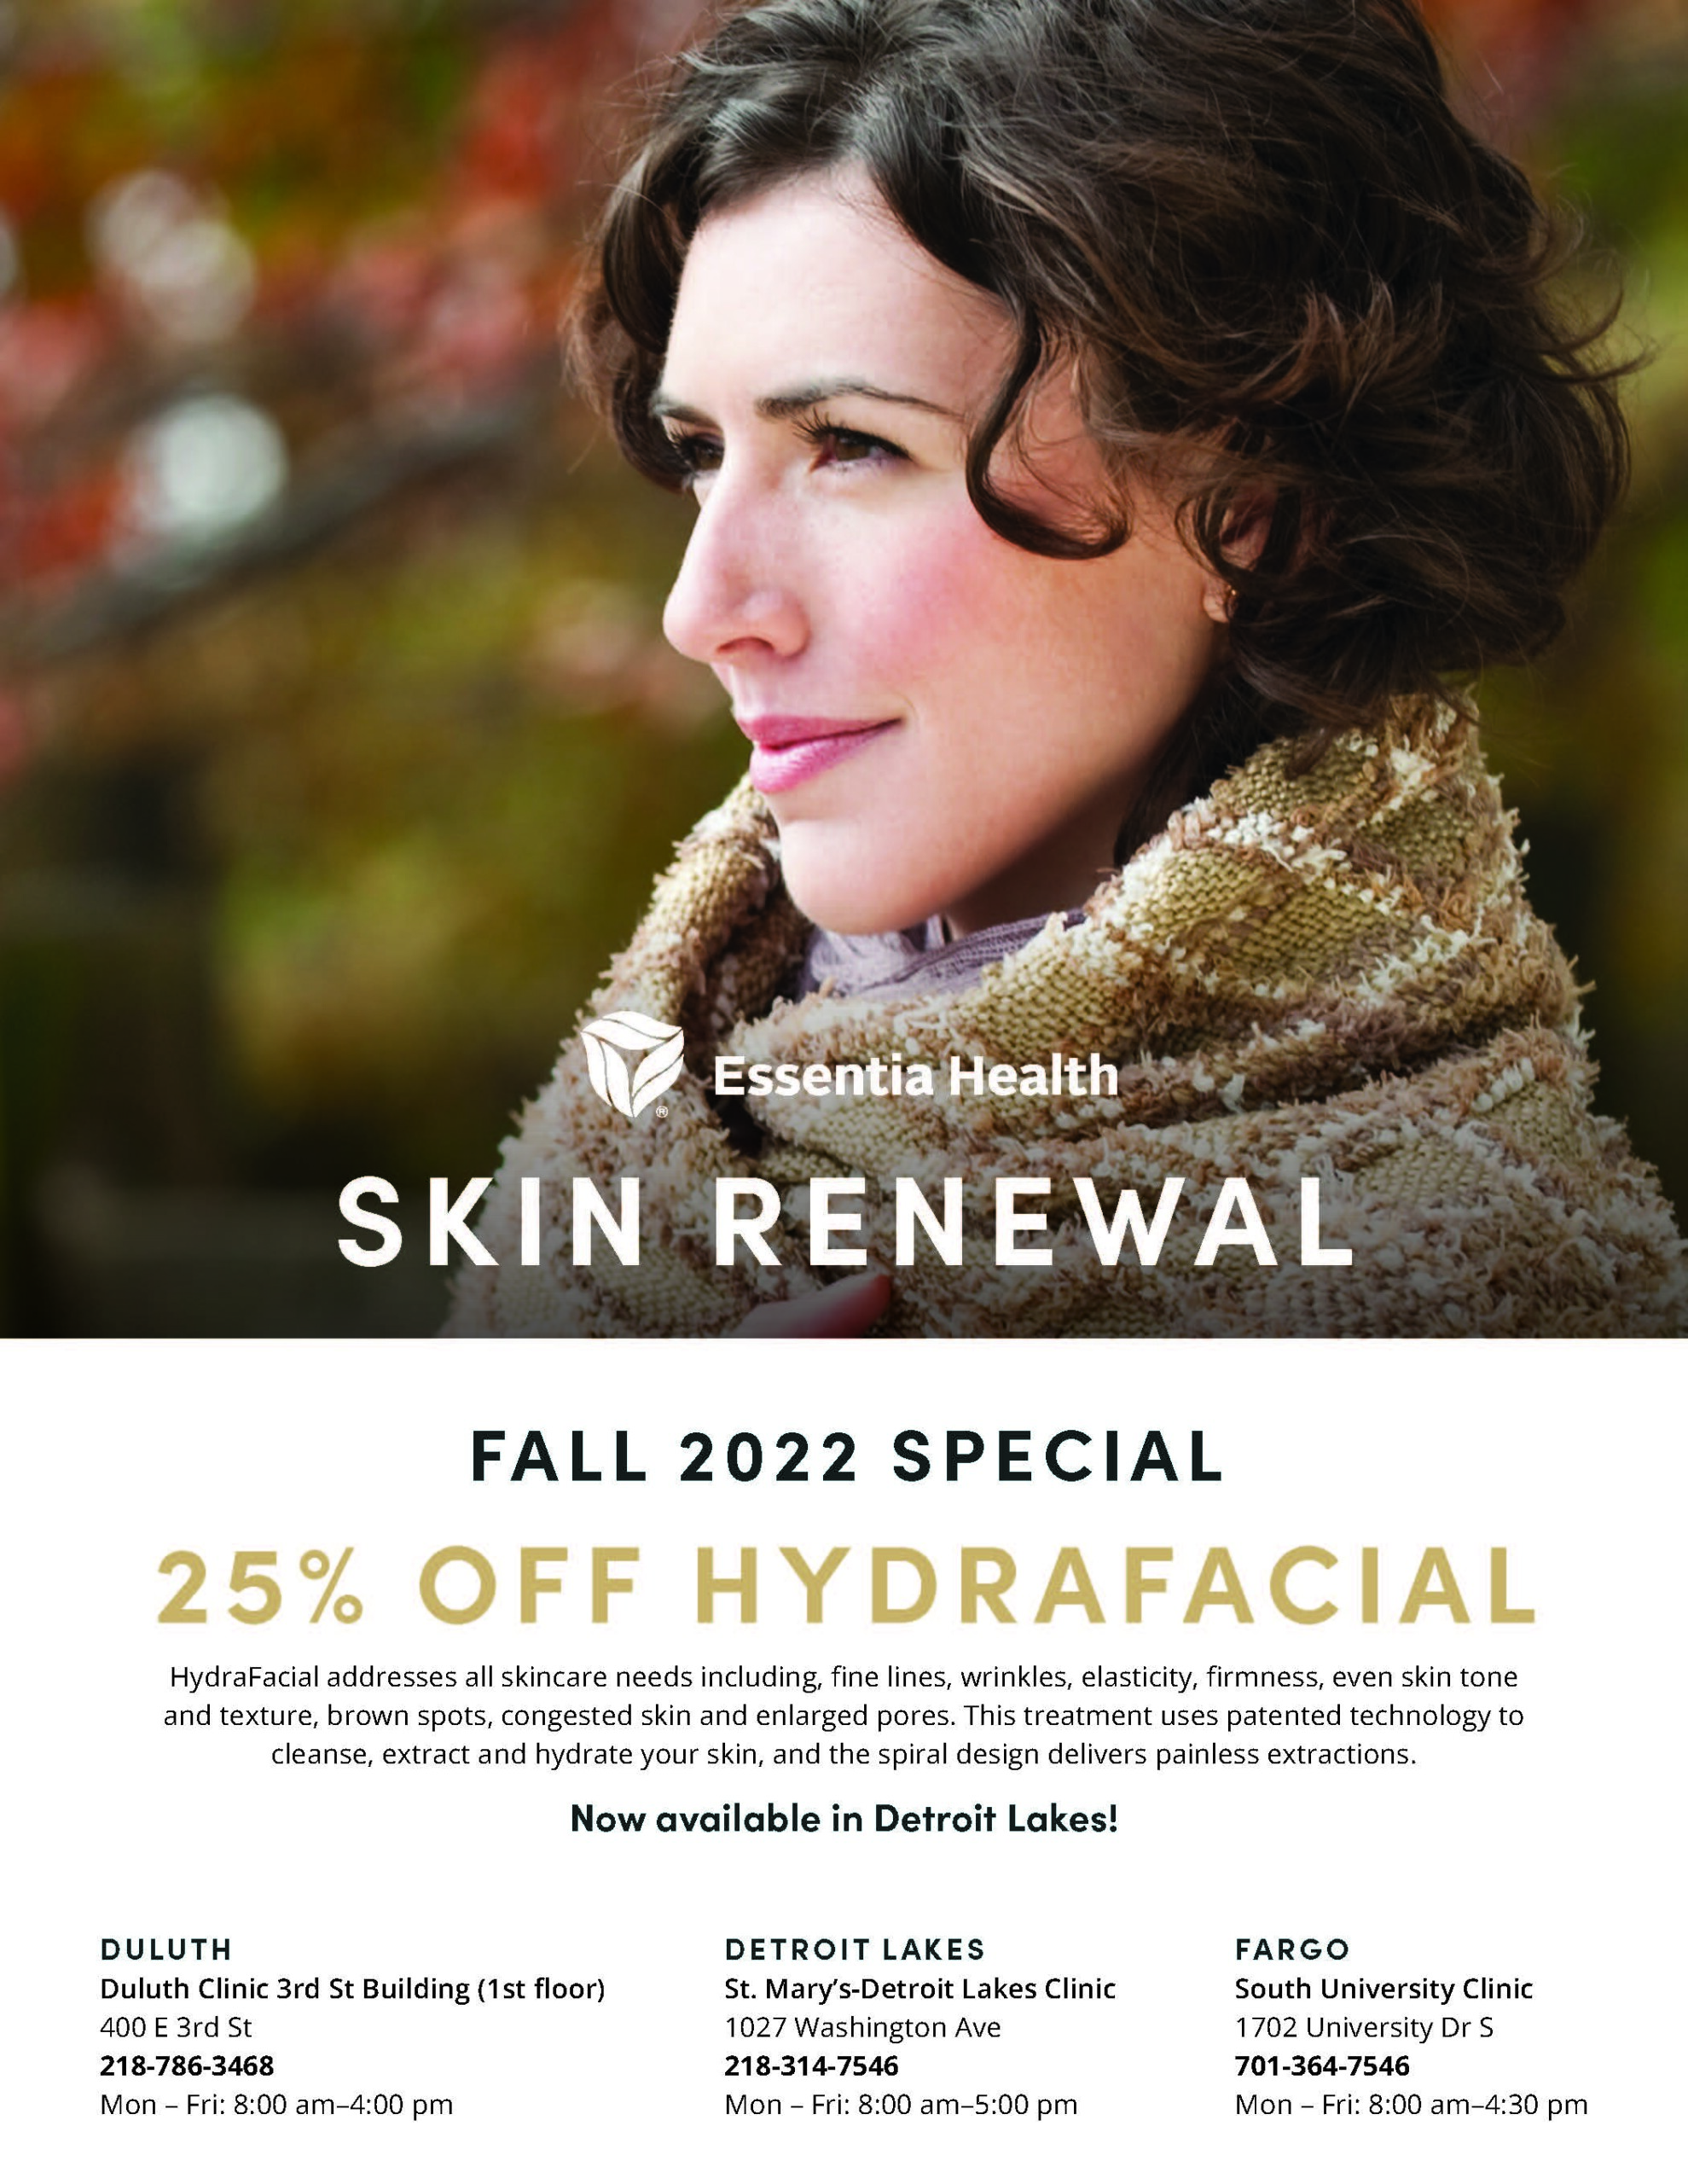 Essential Health Skin Renewal Fall Guide Advertisement